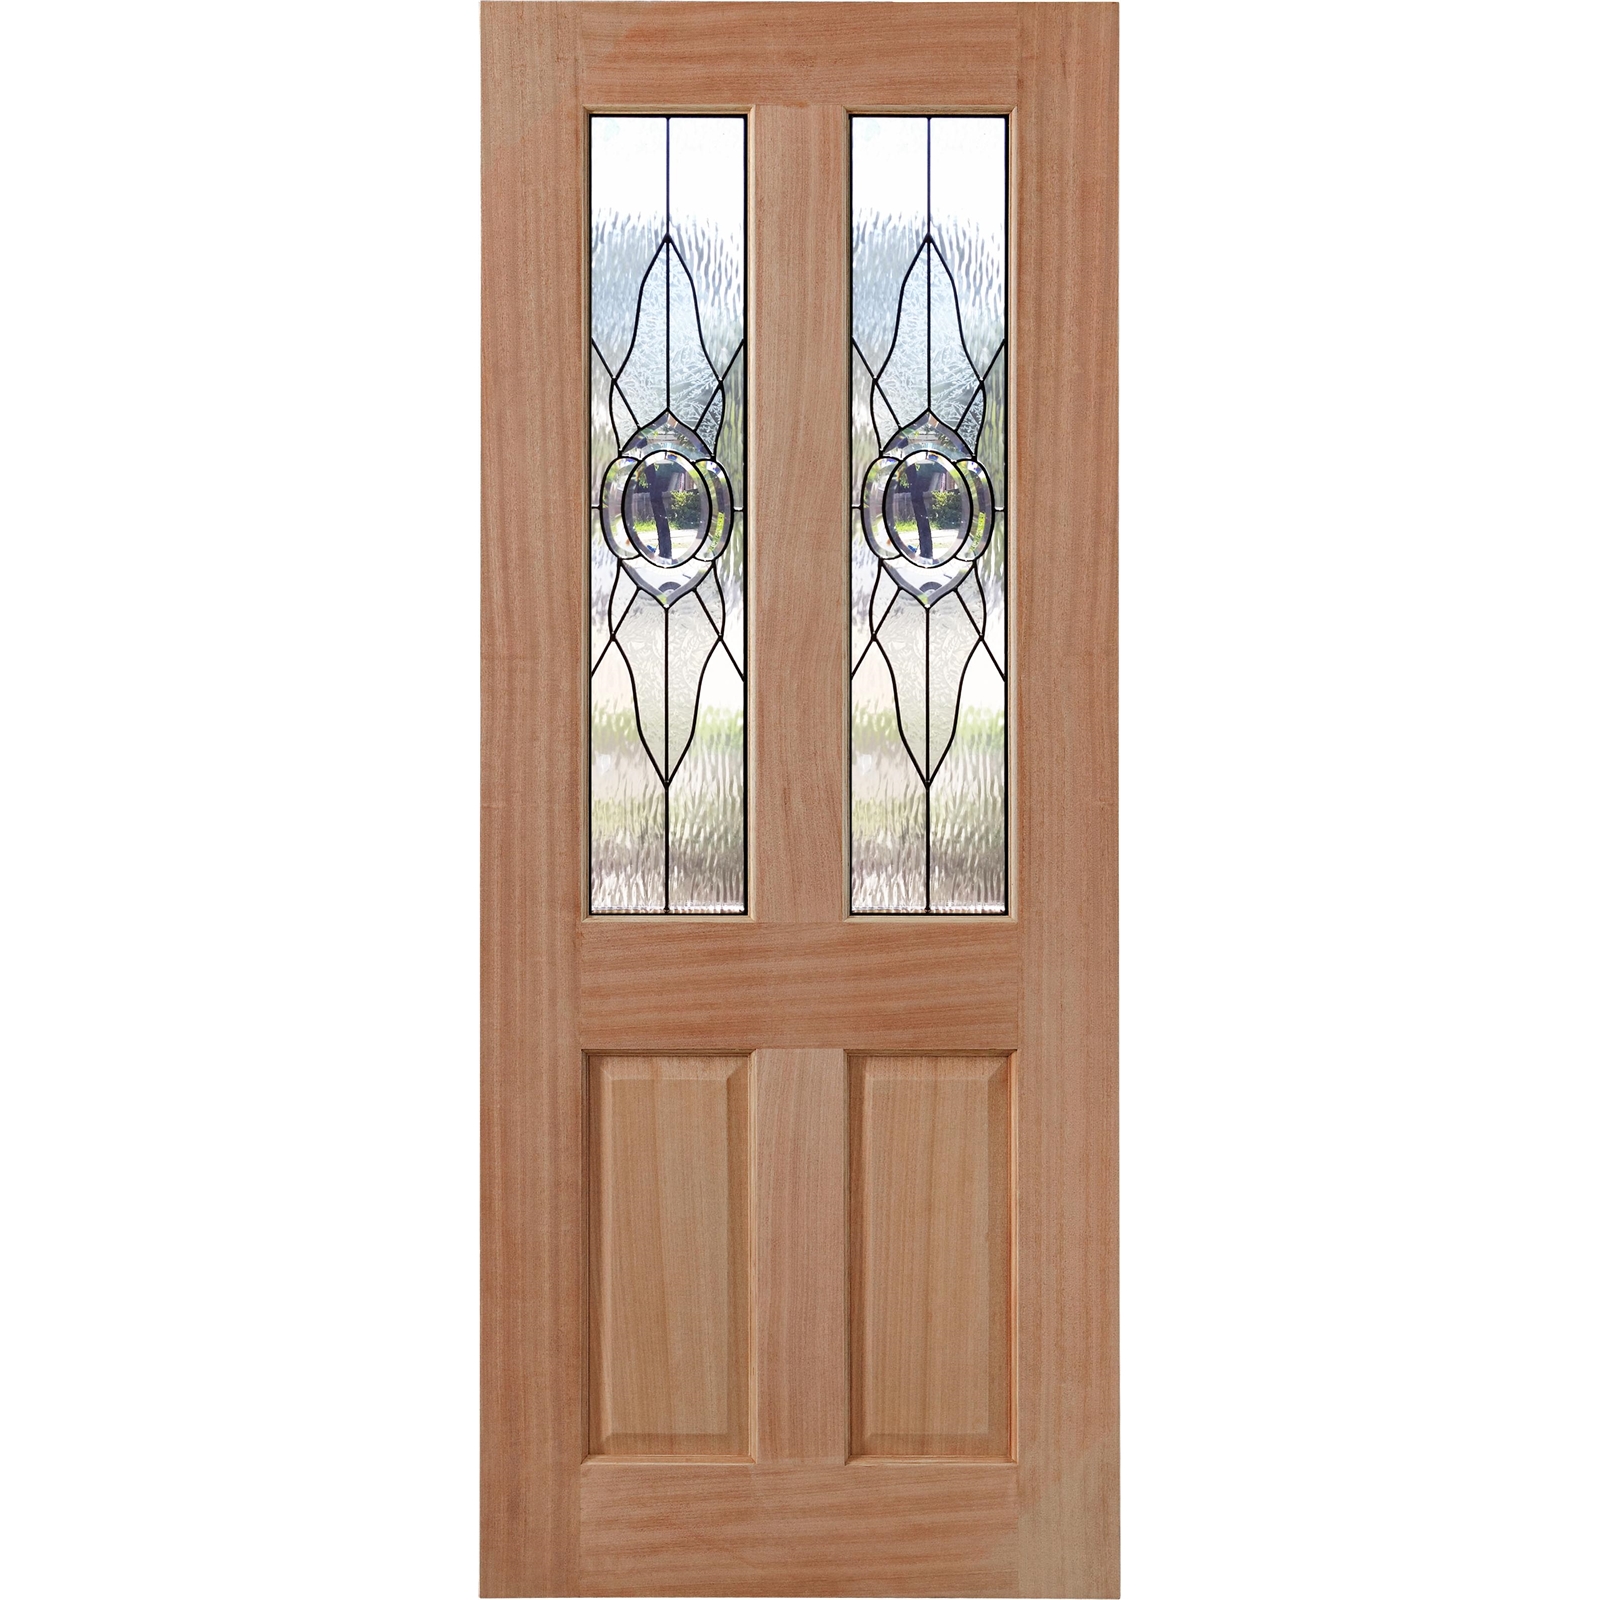 Woodcraft Doors 2040 x 820 x 40mm Cass Chrome Leadlite Entrance Door